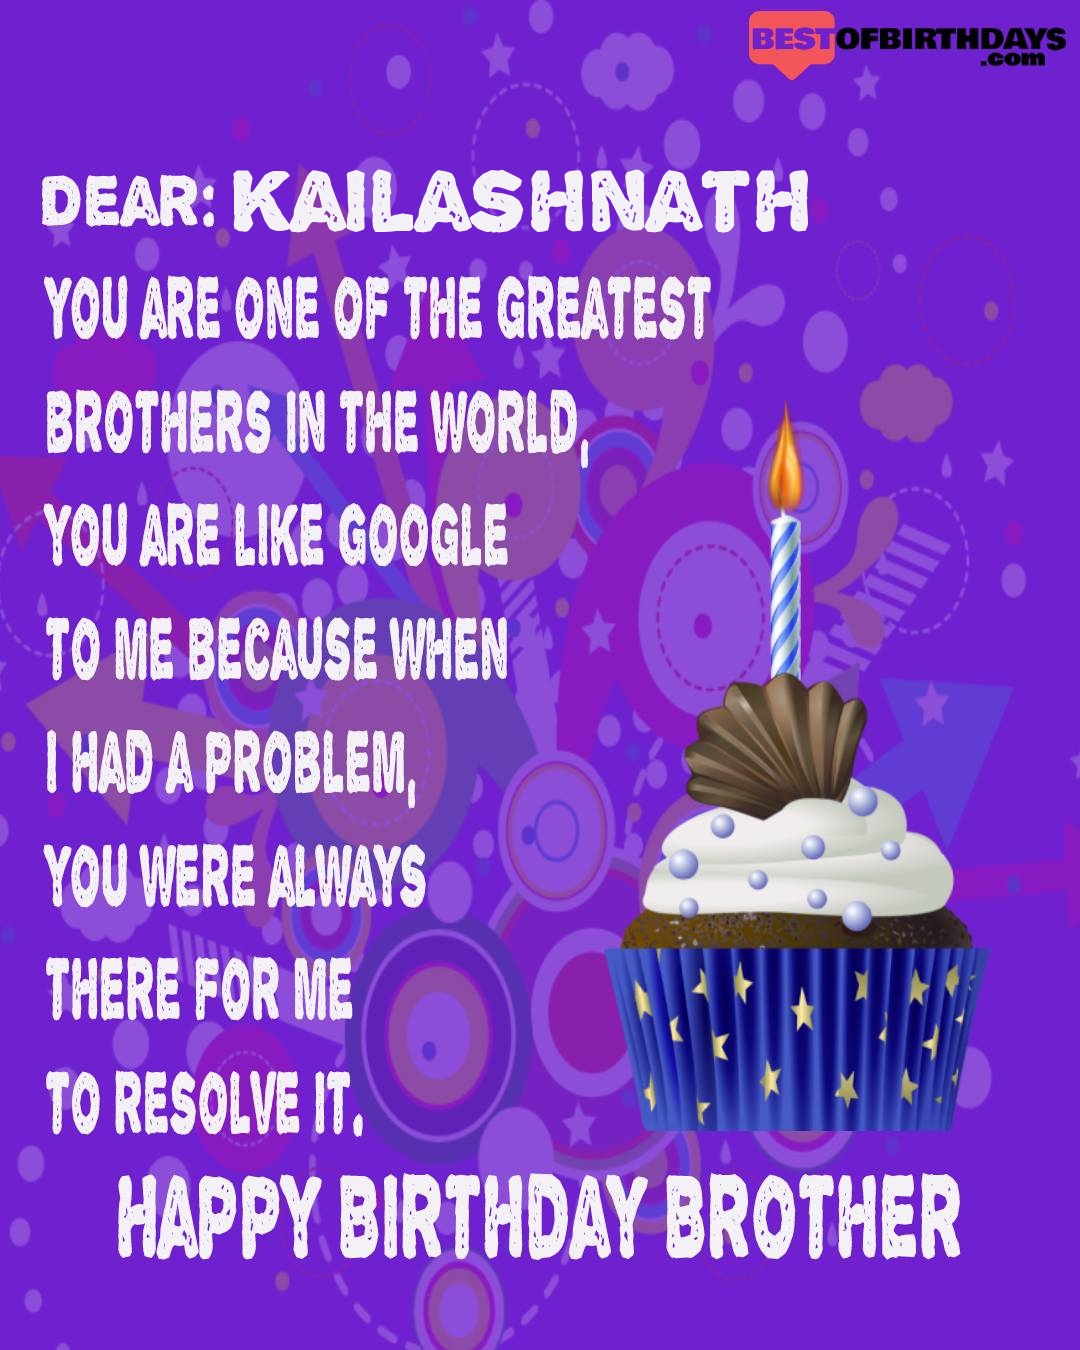 Happy birthday kailashnath bhai brother bro